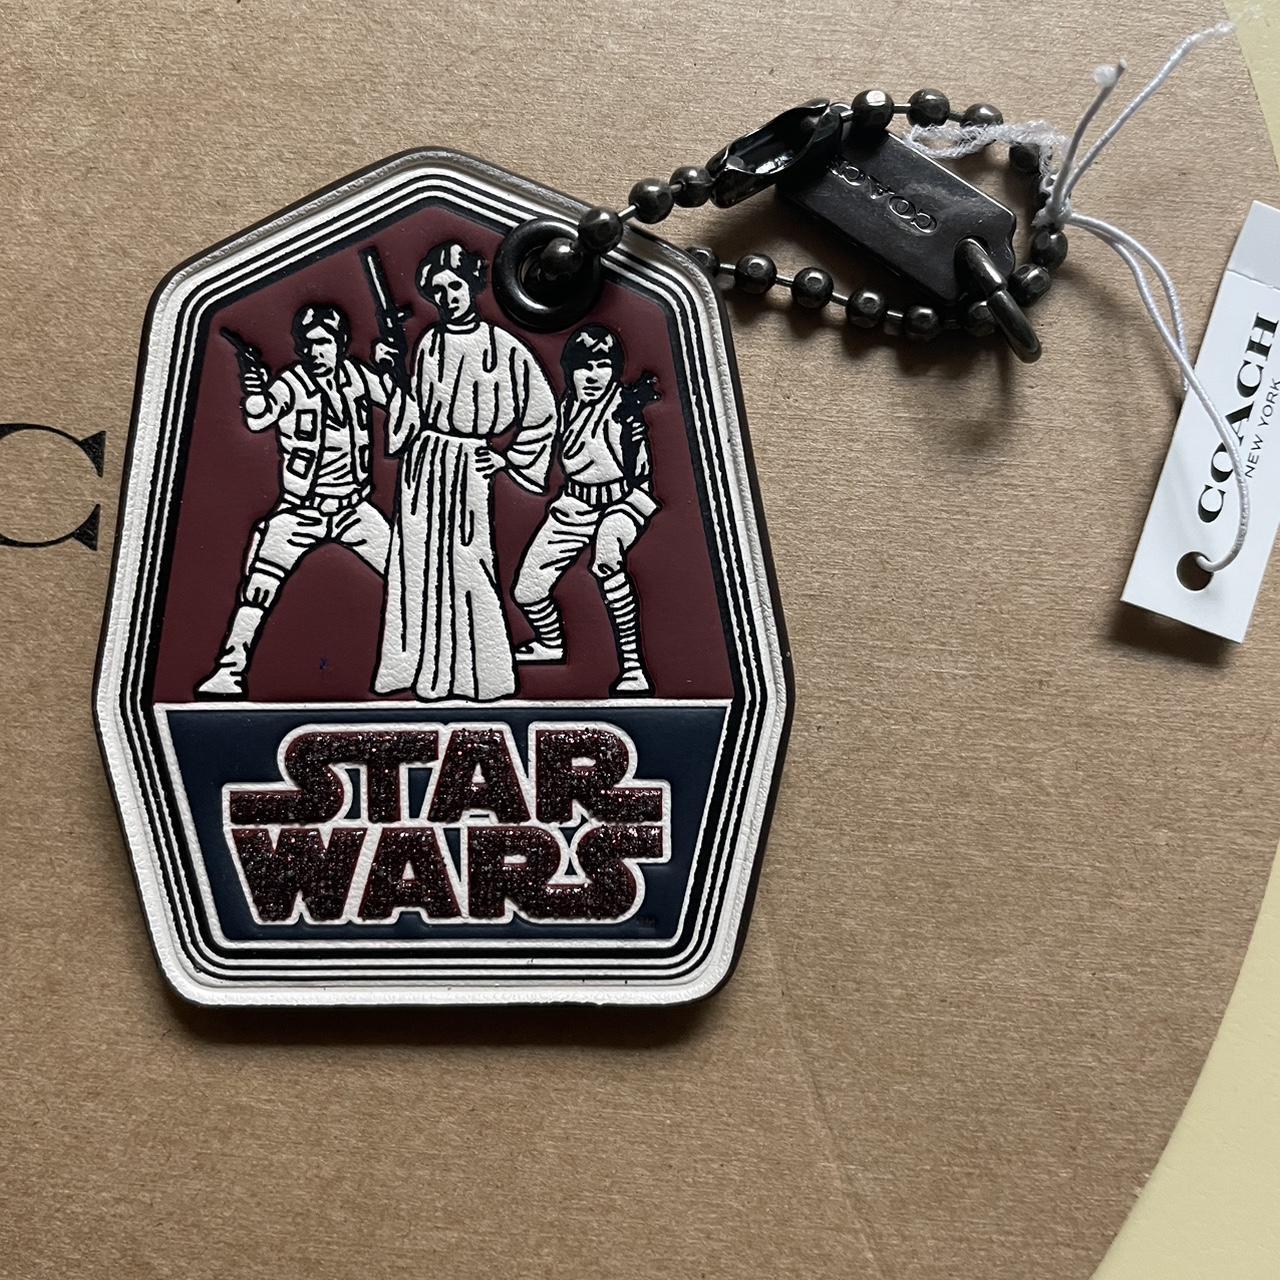 Coach x Star Wars Leather Key Chain Princes Leia... - Depop